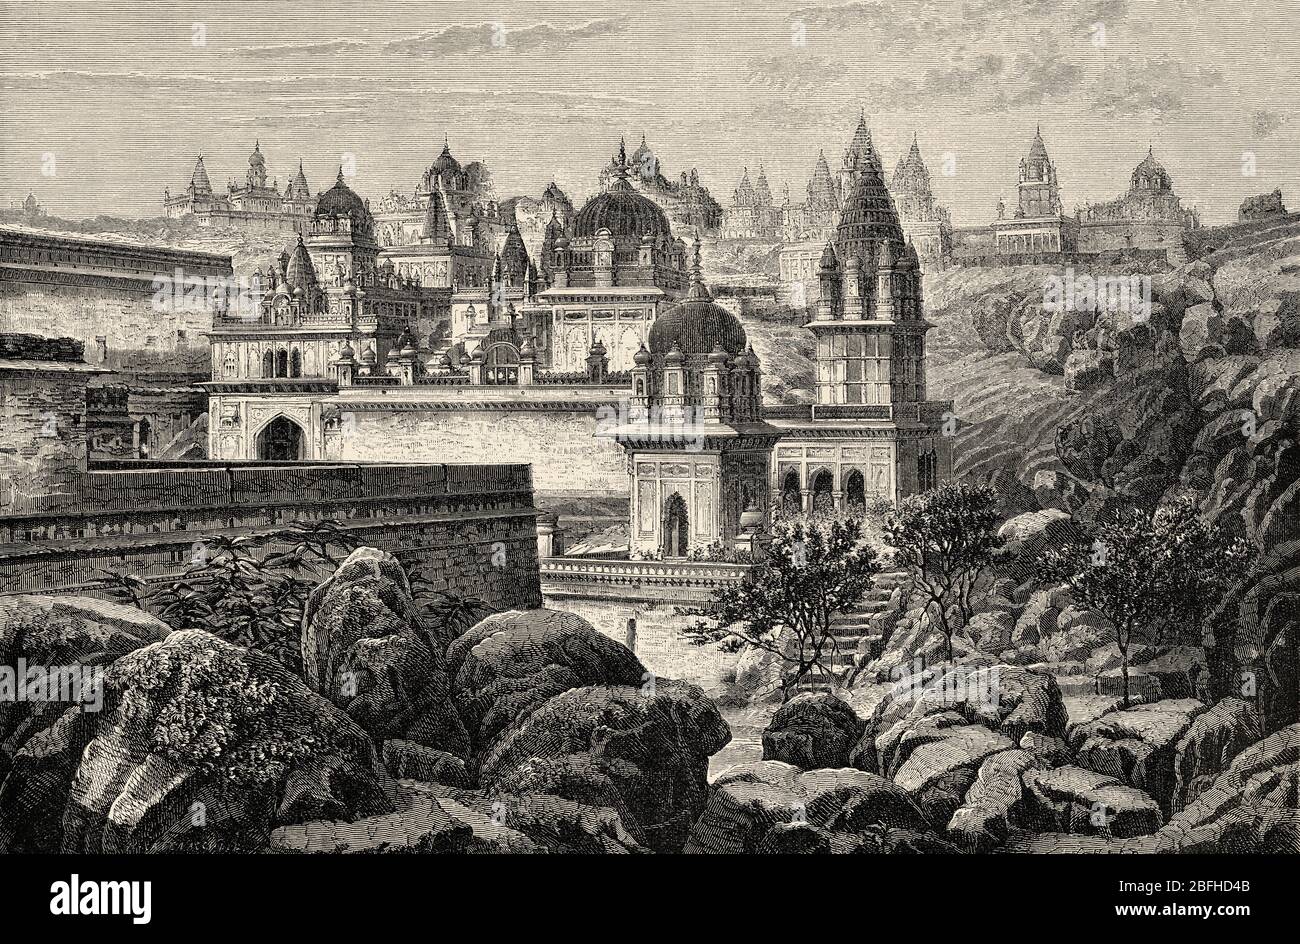 Sounghur sacred hill, Madhya Pradesh India. Old engraving illustration from El Mundo en la Mano 1878 Stock Photo